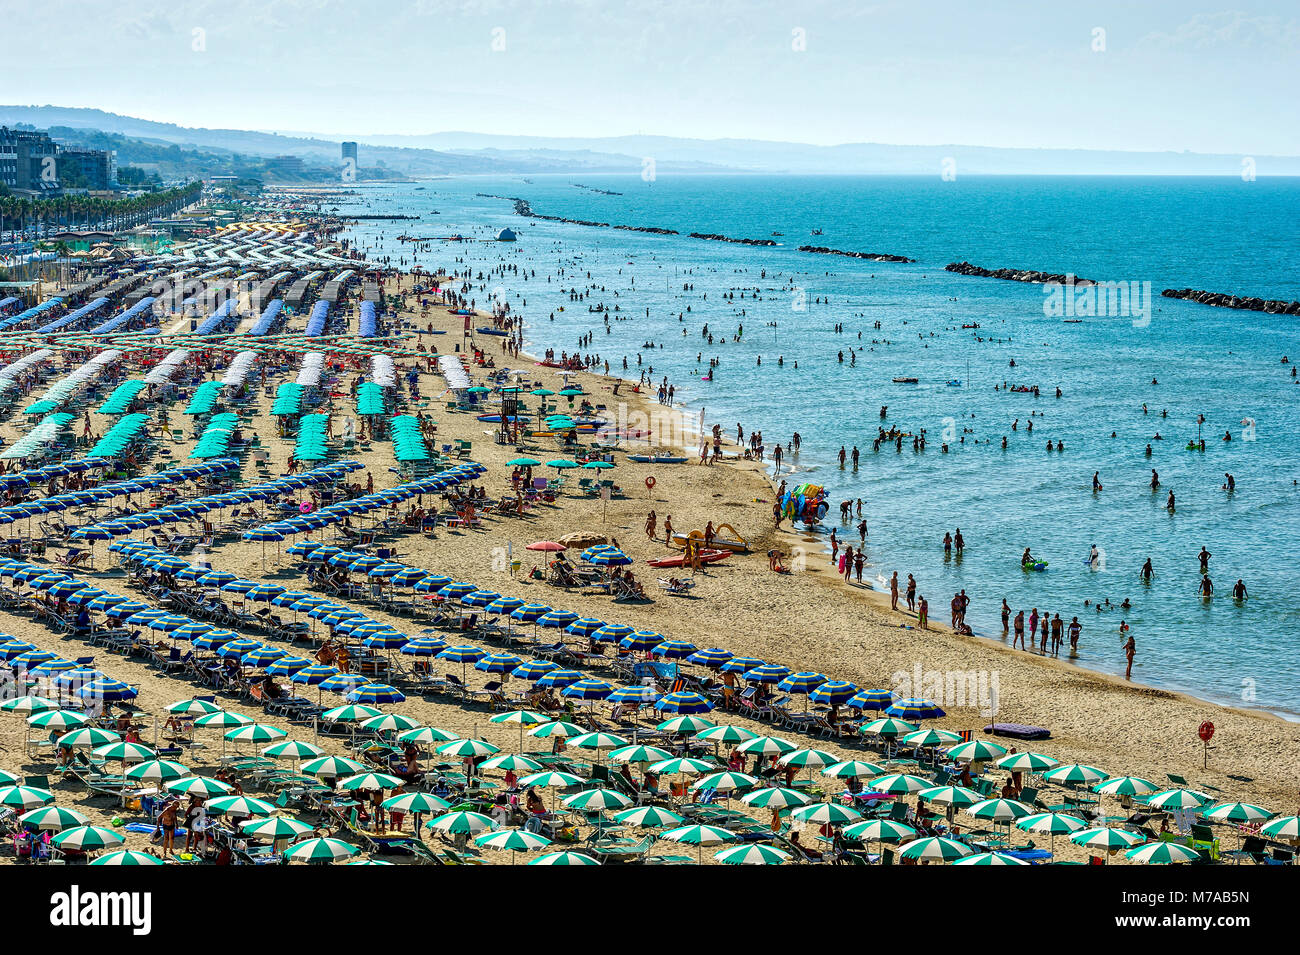 Overcrowded touristic bathing beach with umbrellas, Lungomare Cristoforo Colombo, Molise, Italy Stock Photo